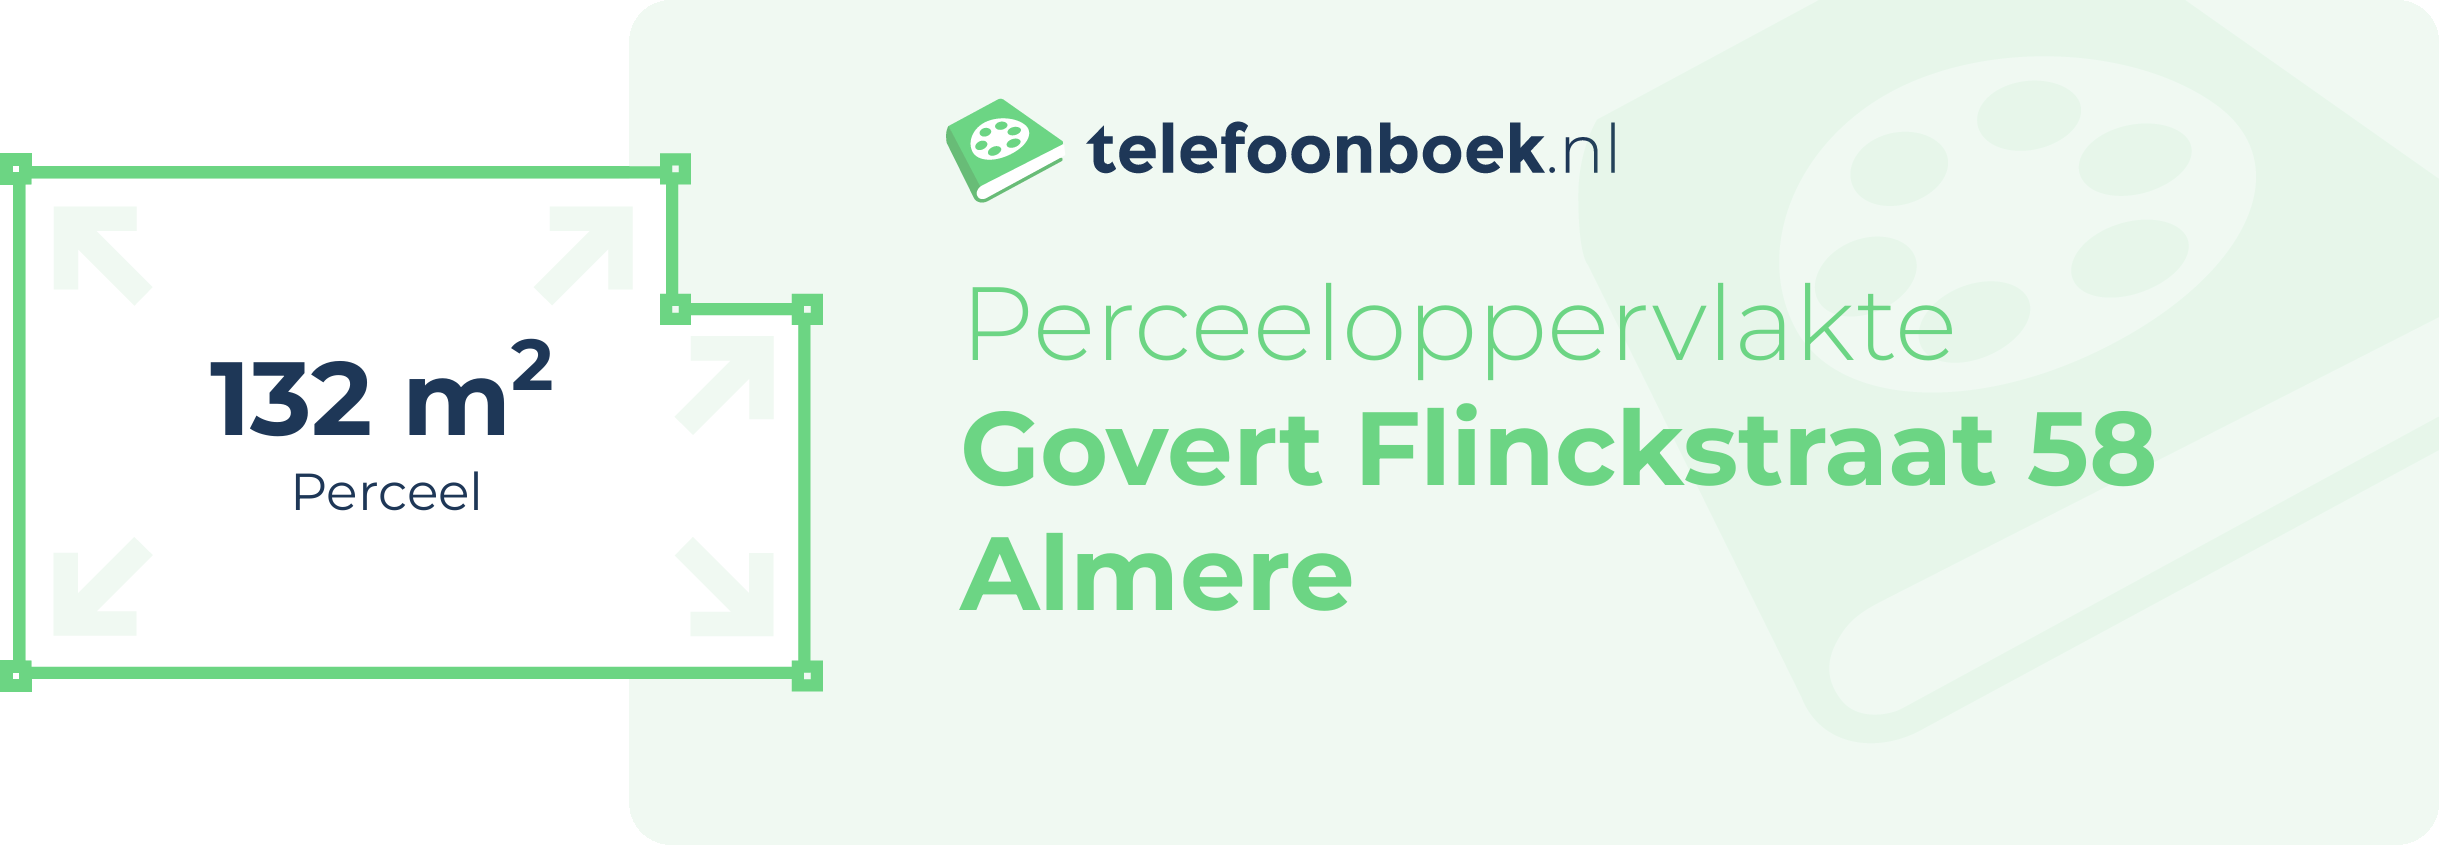 Perceeloppervlakte Govert Flinckstraat 58 Almere